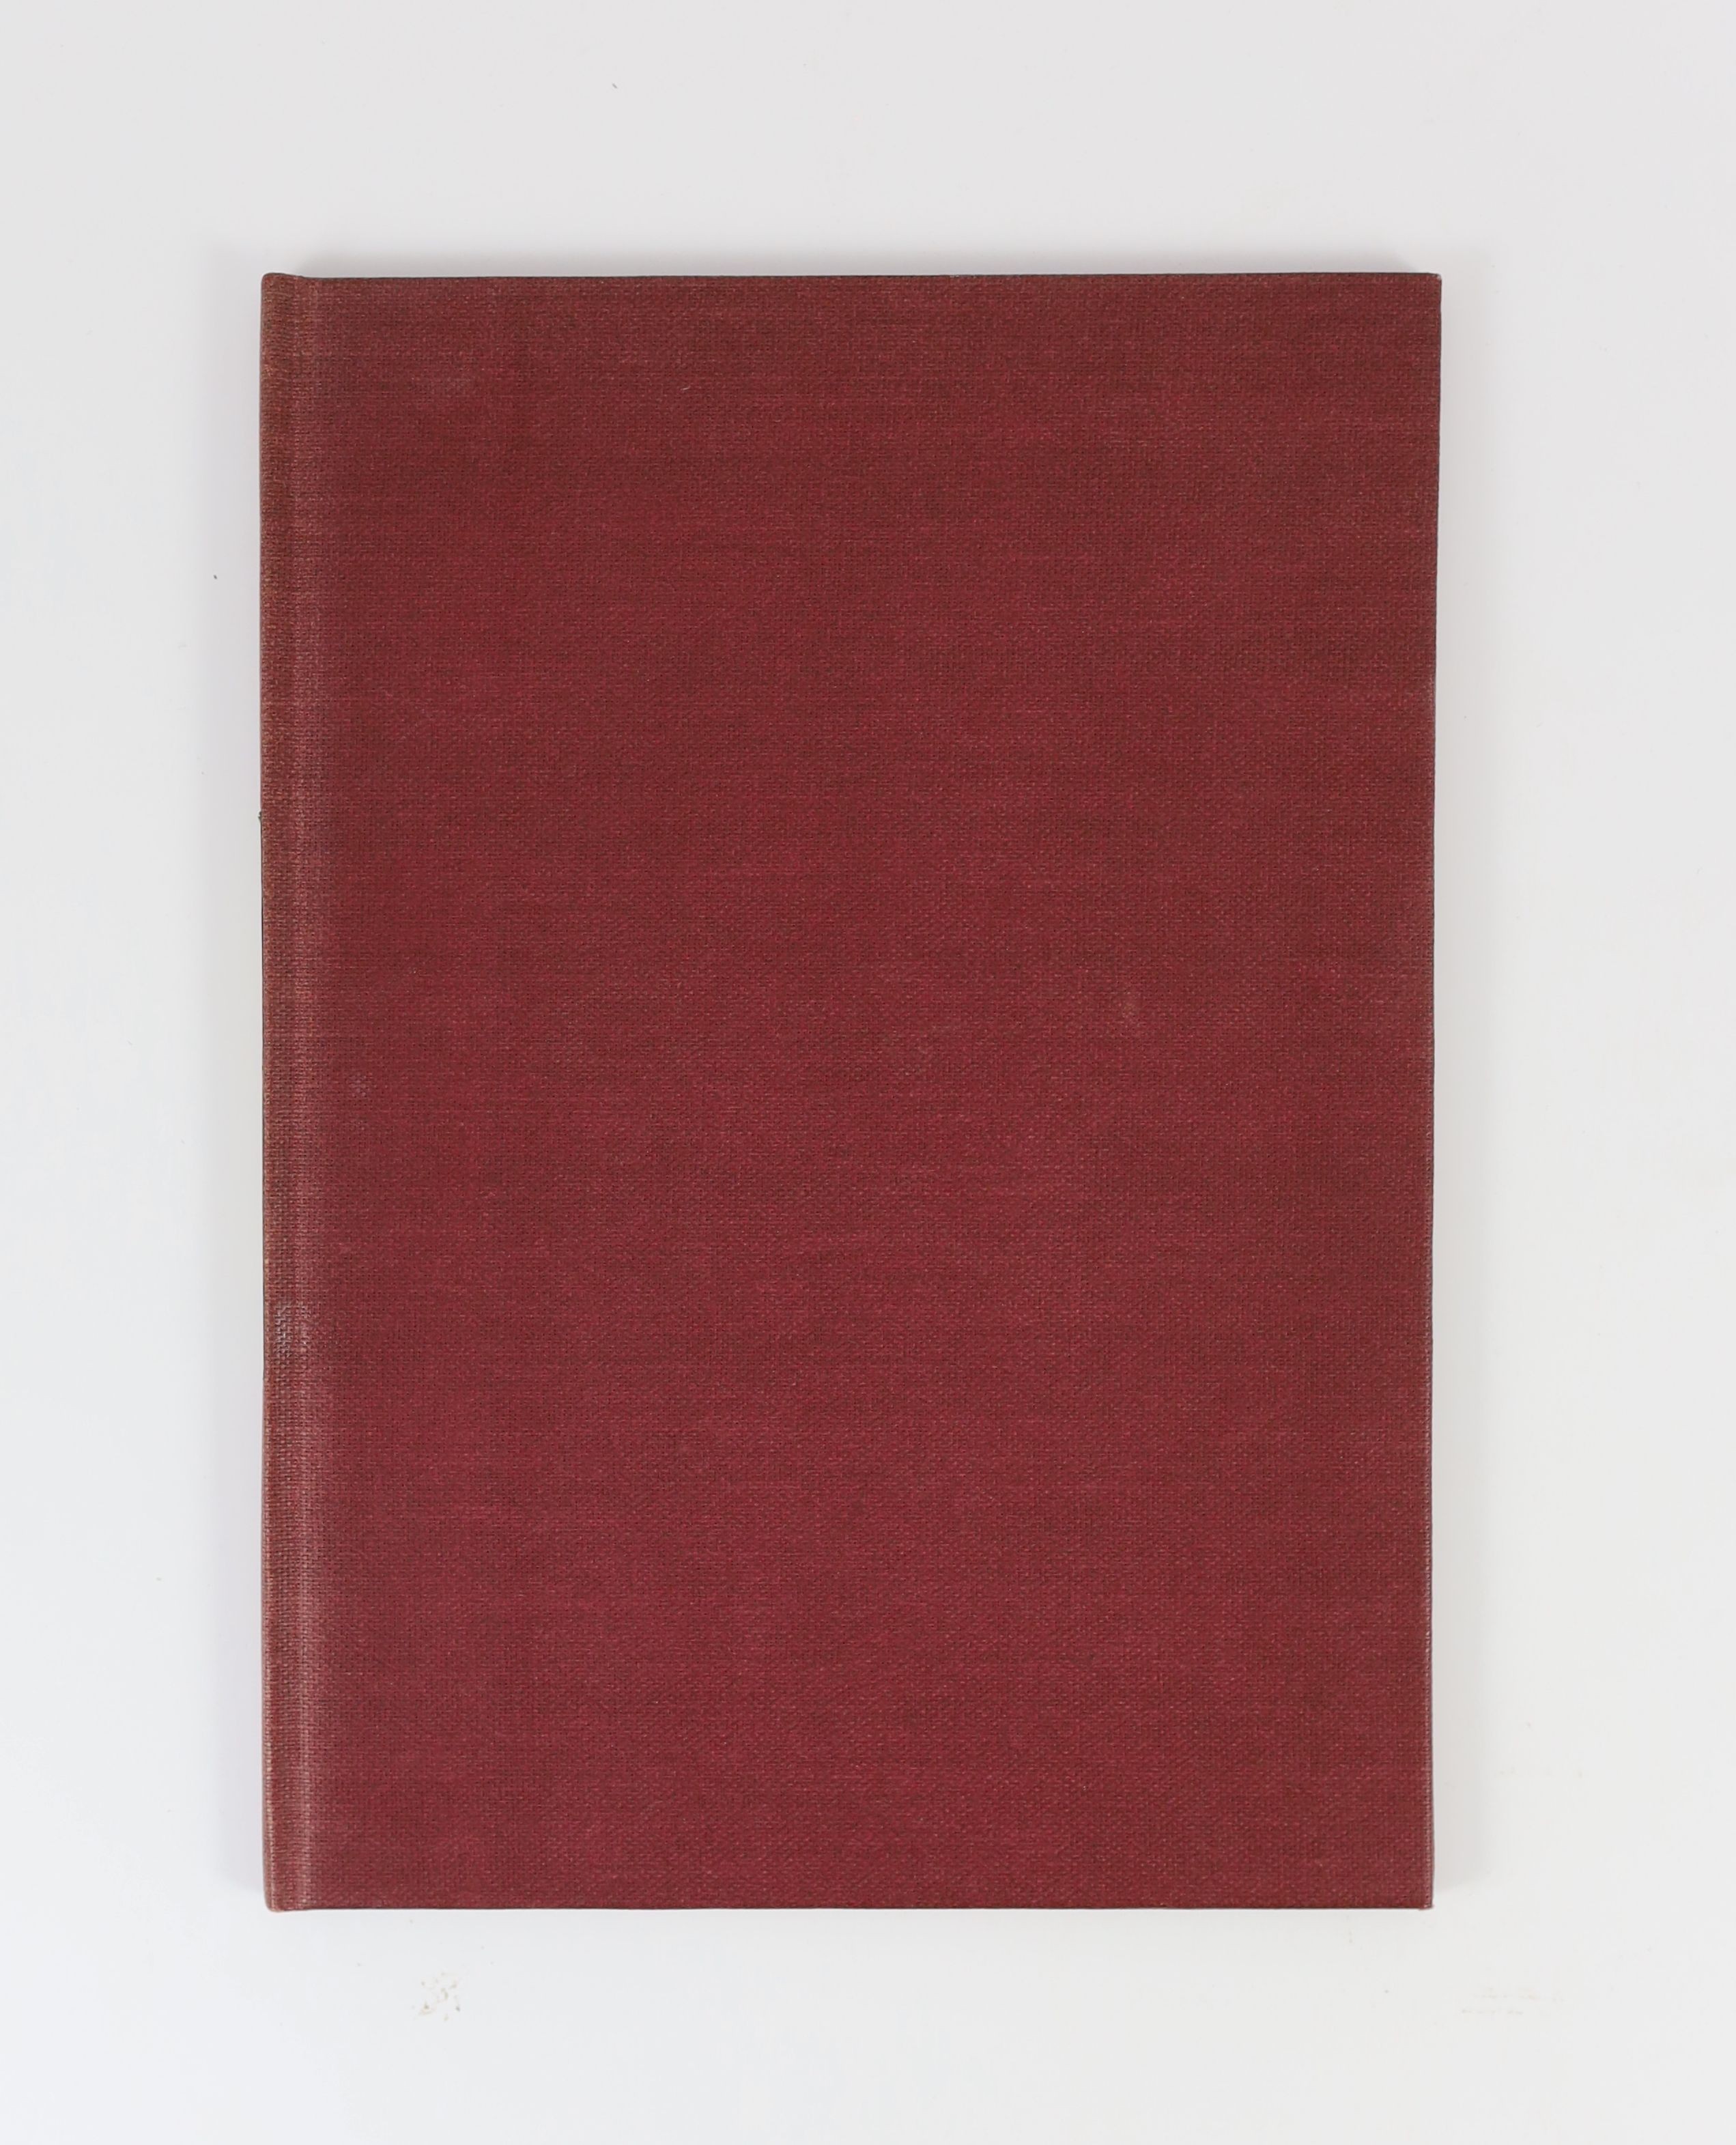 Golden Cockerel Press - Swinburne, Algernon Charles - Hymn to Proserpine, one of 350, 4to, burgundy cloth, 5 wood-engravings by John Buckland-Wright, 4to, Leominster, 1944